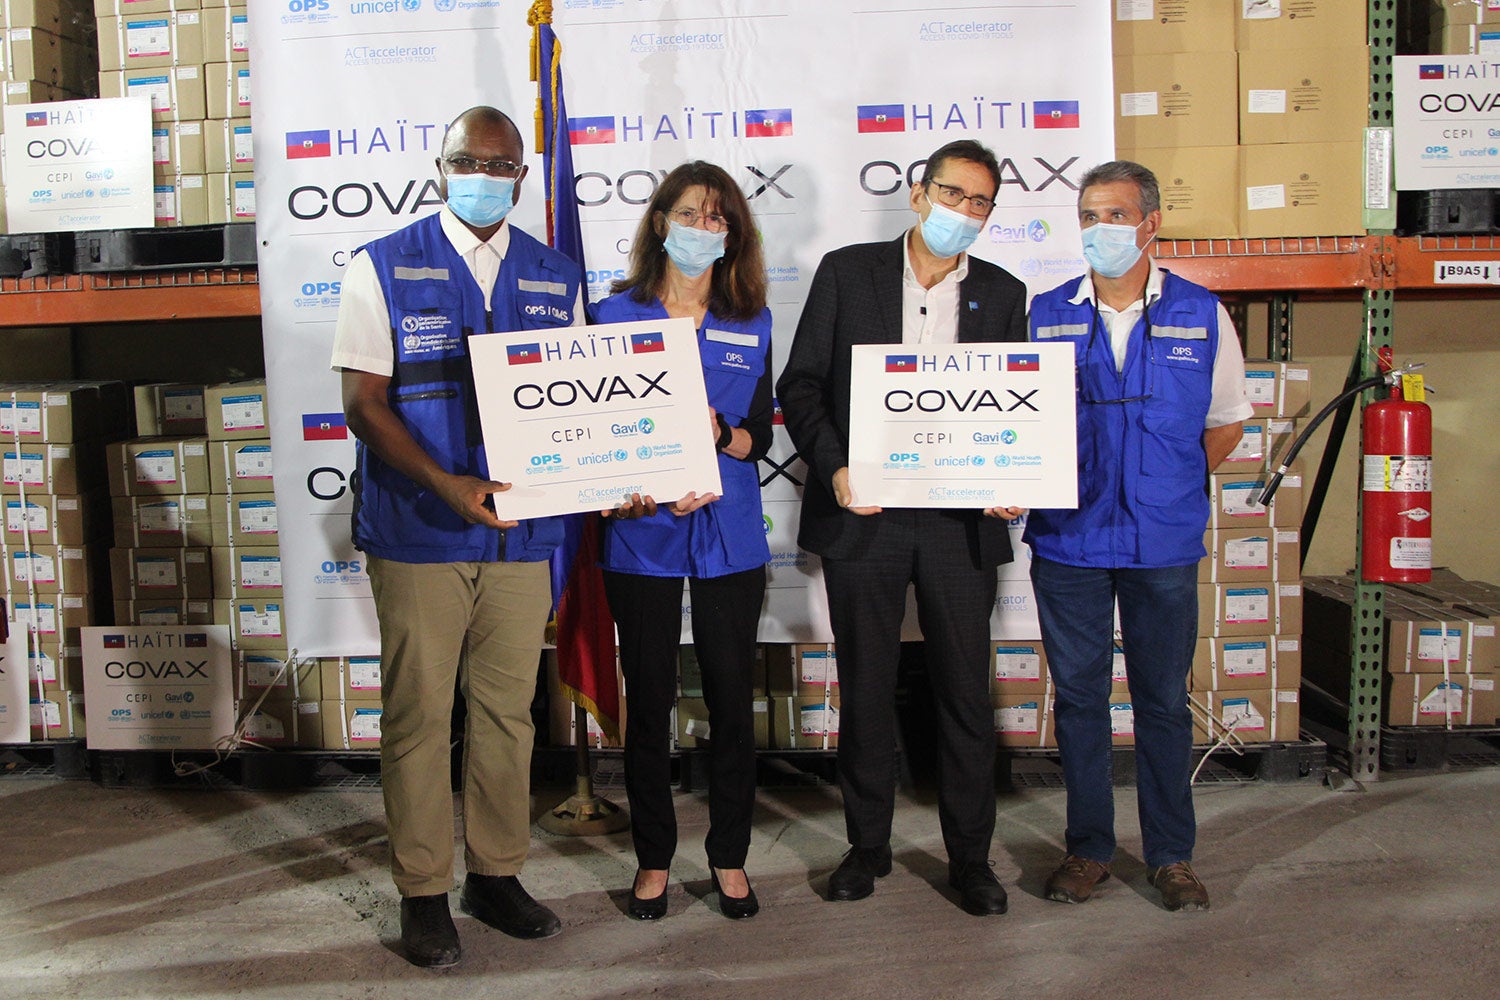 Arrival of COVID-19 vaccines in Haiti